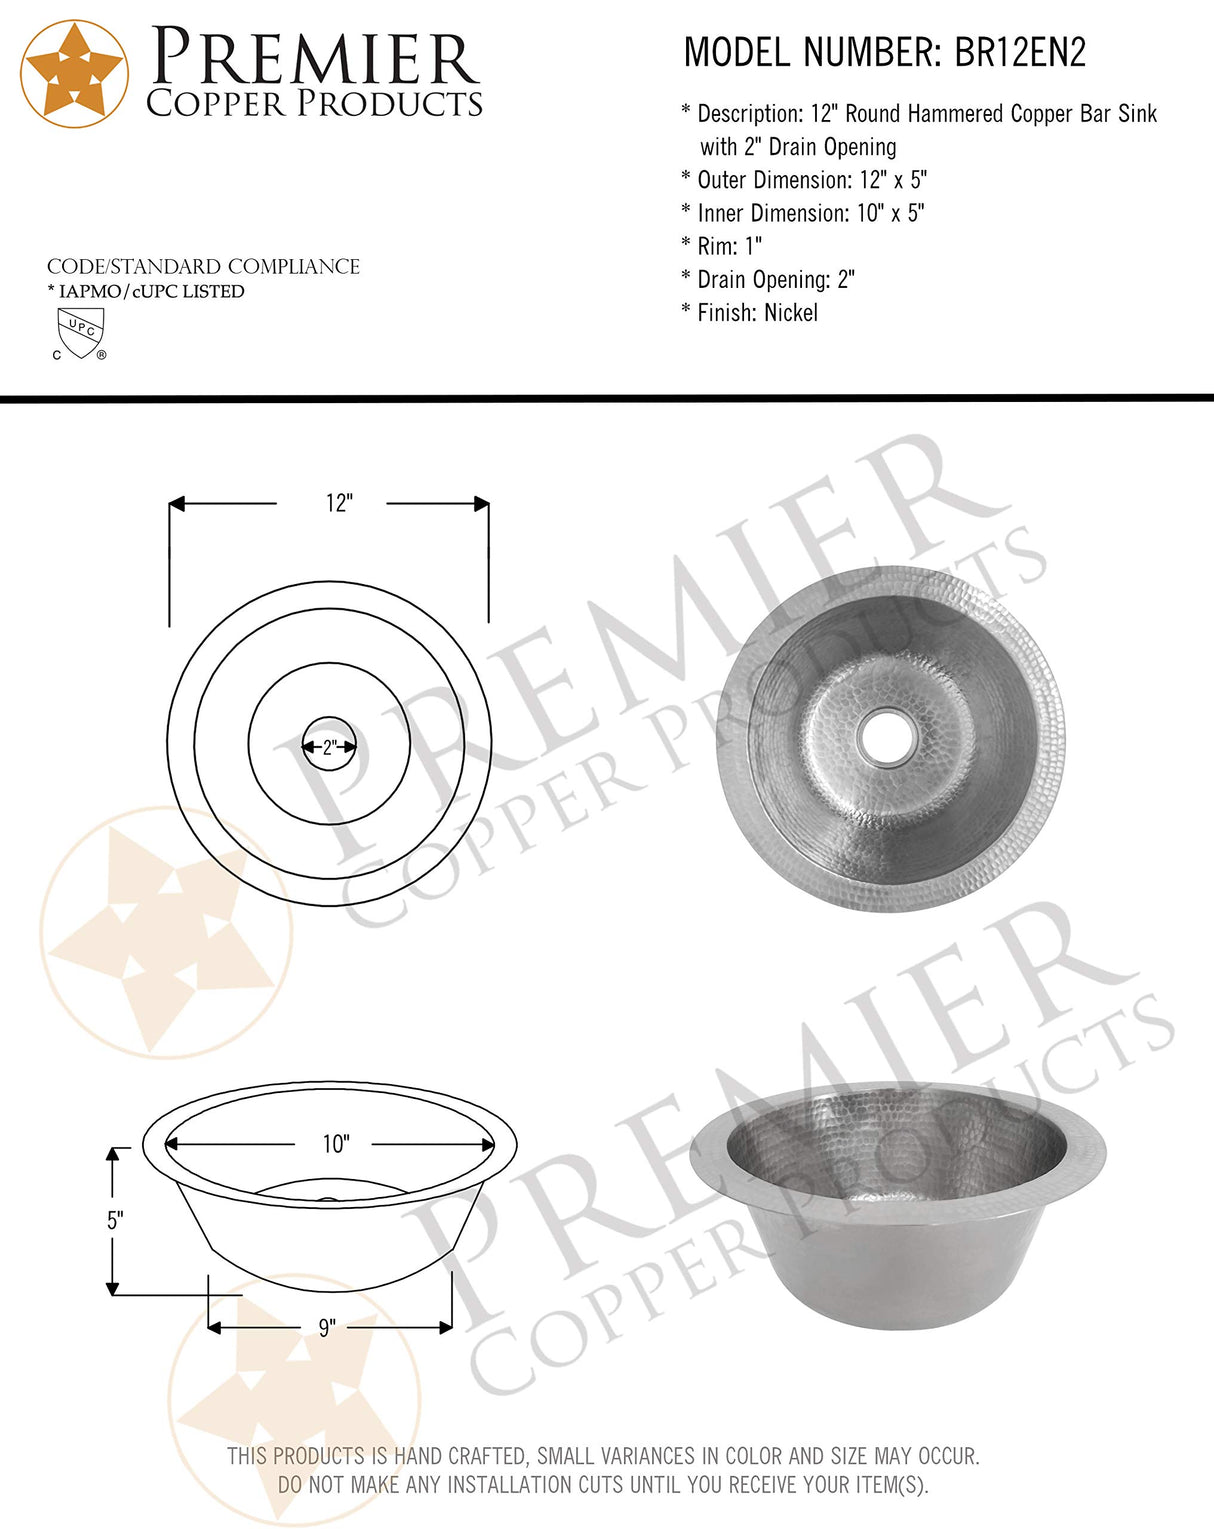 Premier Copper Products BR12EN2 12-Inch Round Hammered Copper Bar Sink w/ 2-Inch Drain Size in Nickel